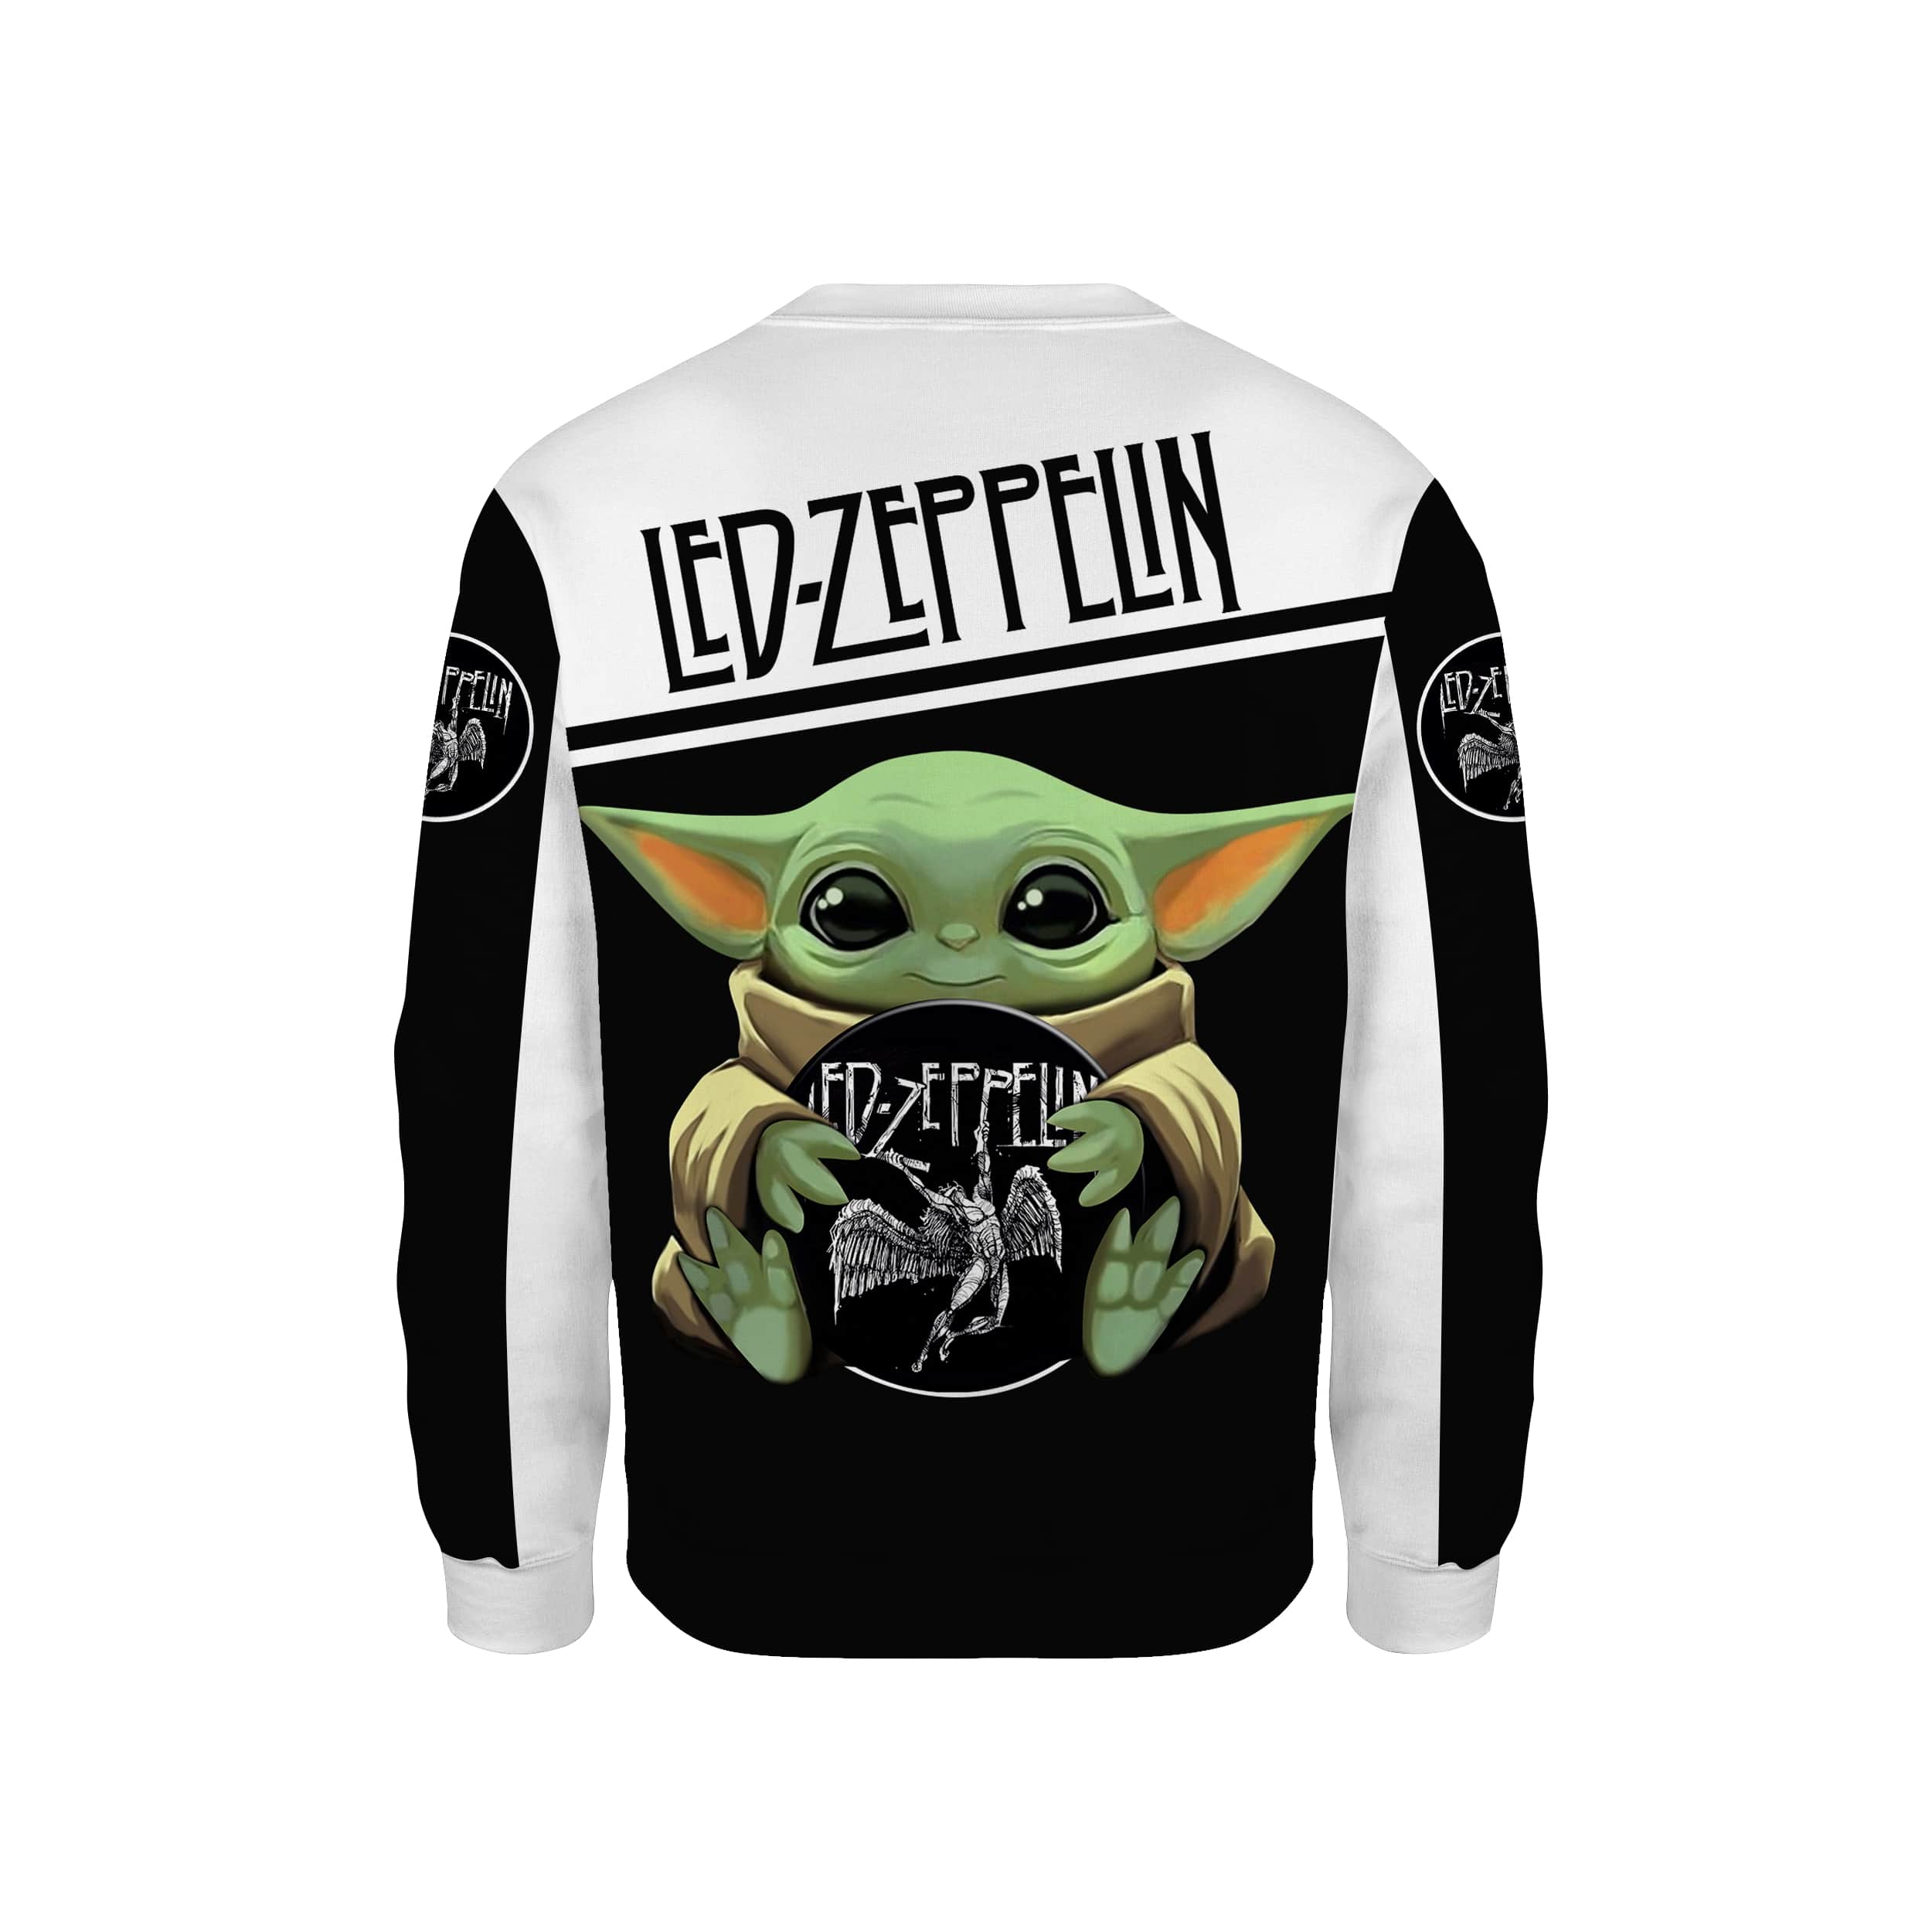 Baby yoda led zeppelin full printing sweatshirt - back